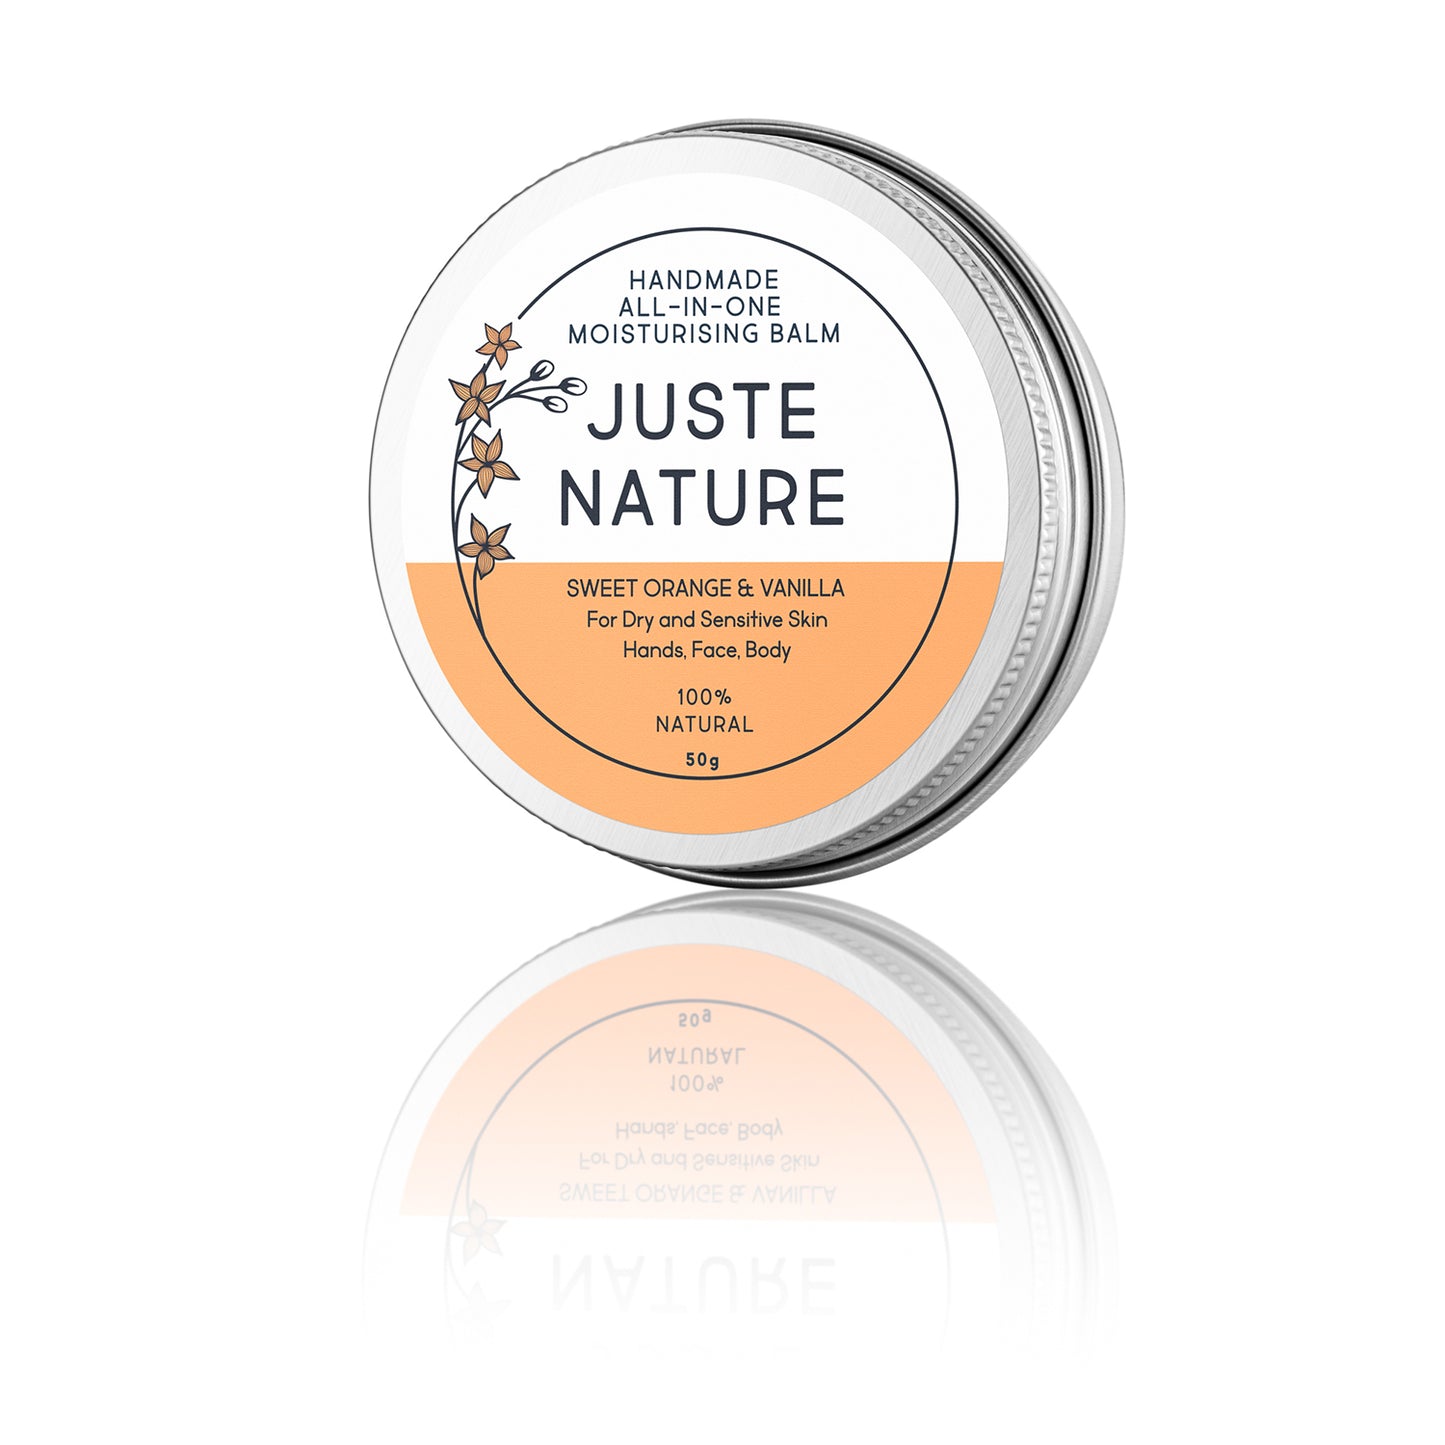 Juste Nature sweet orange and vanilla moisturising balm